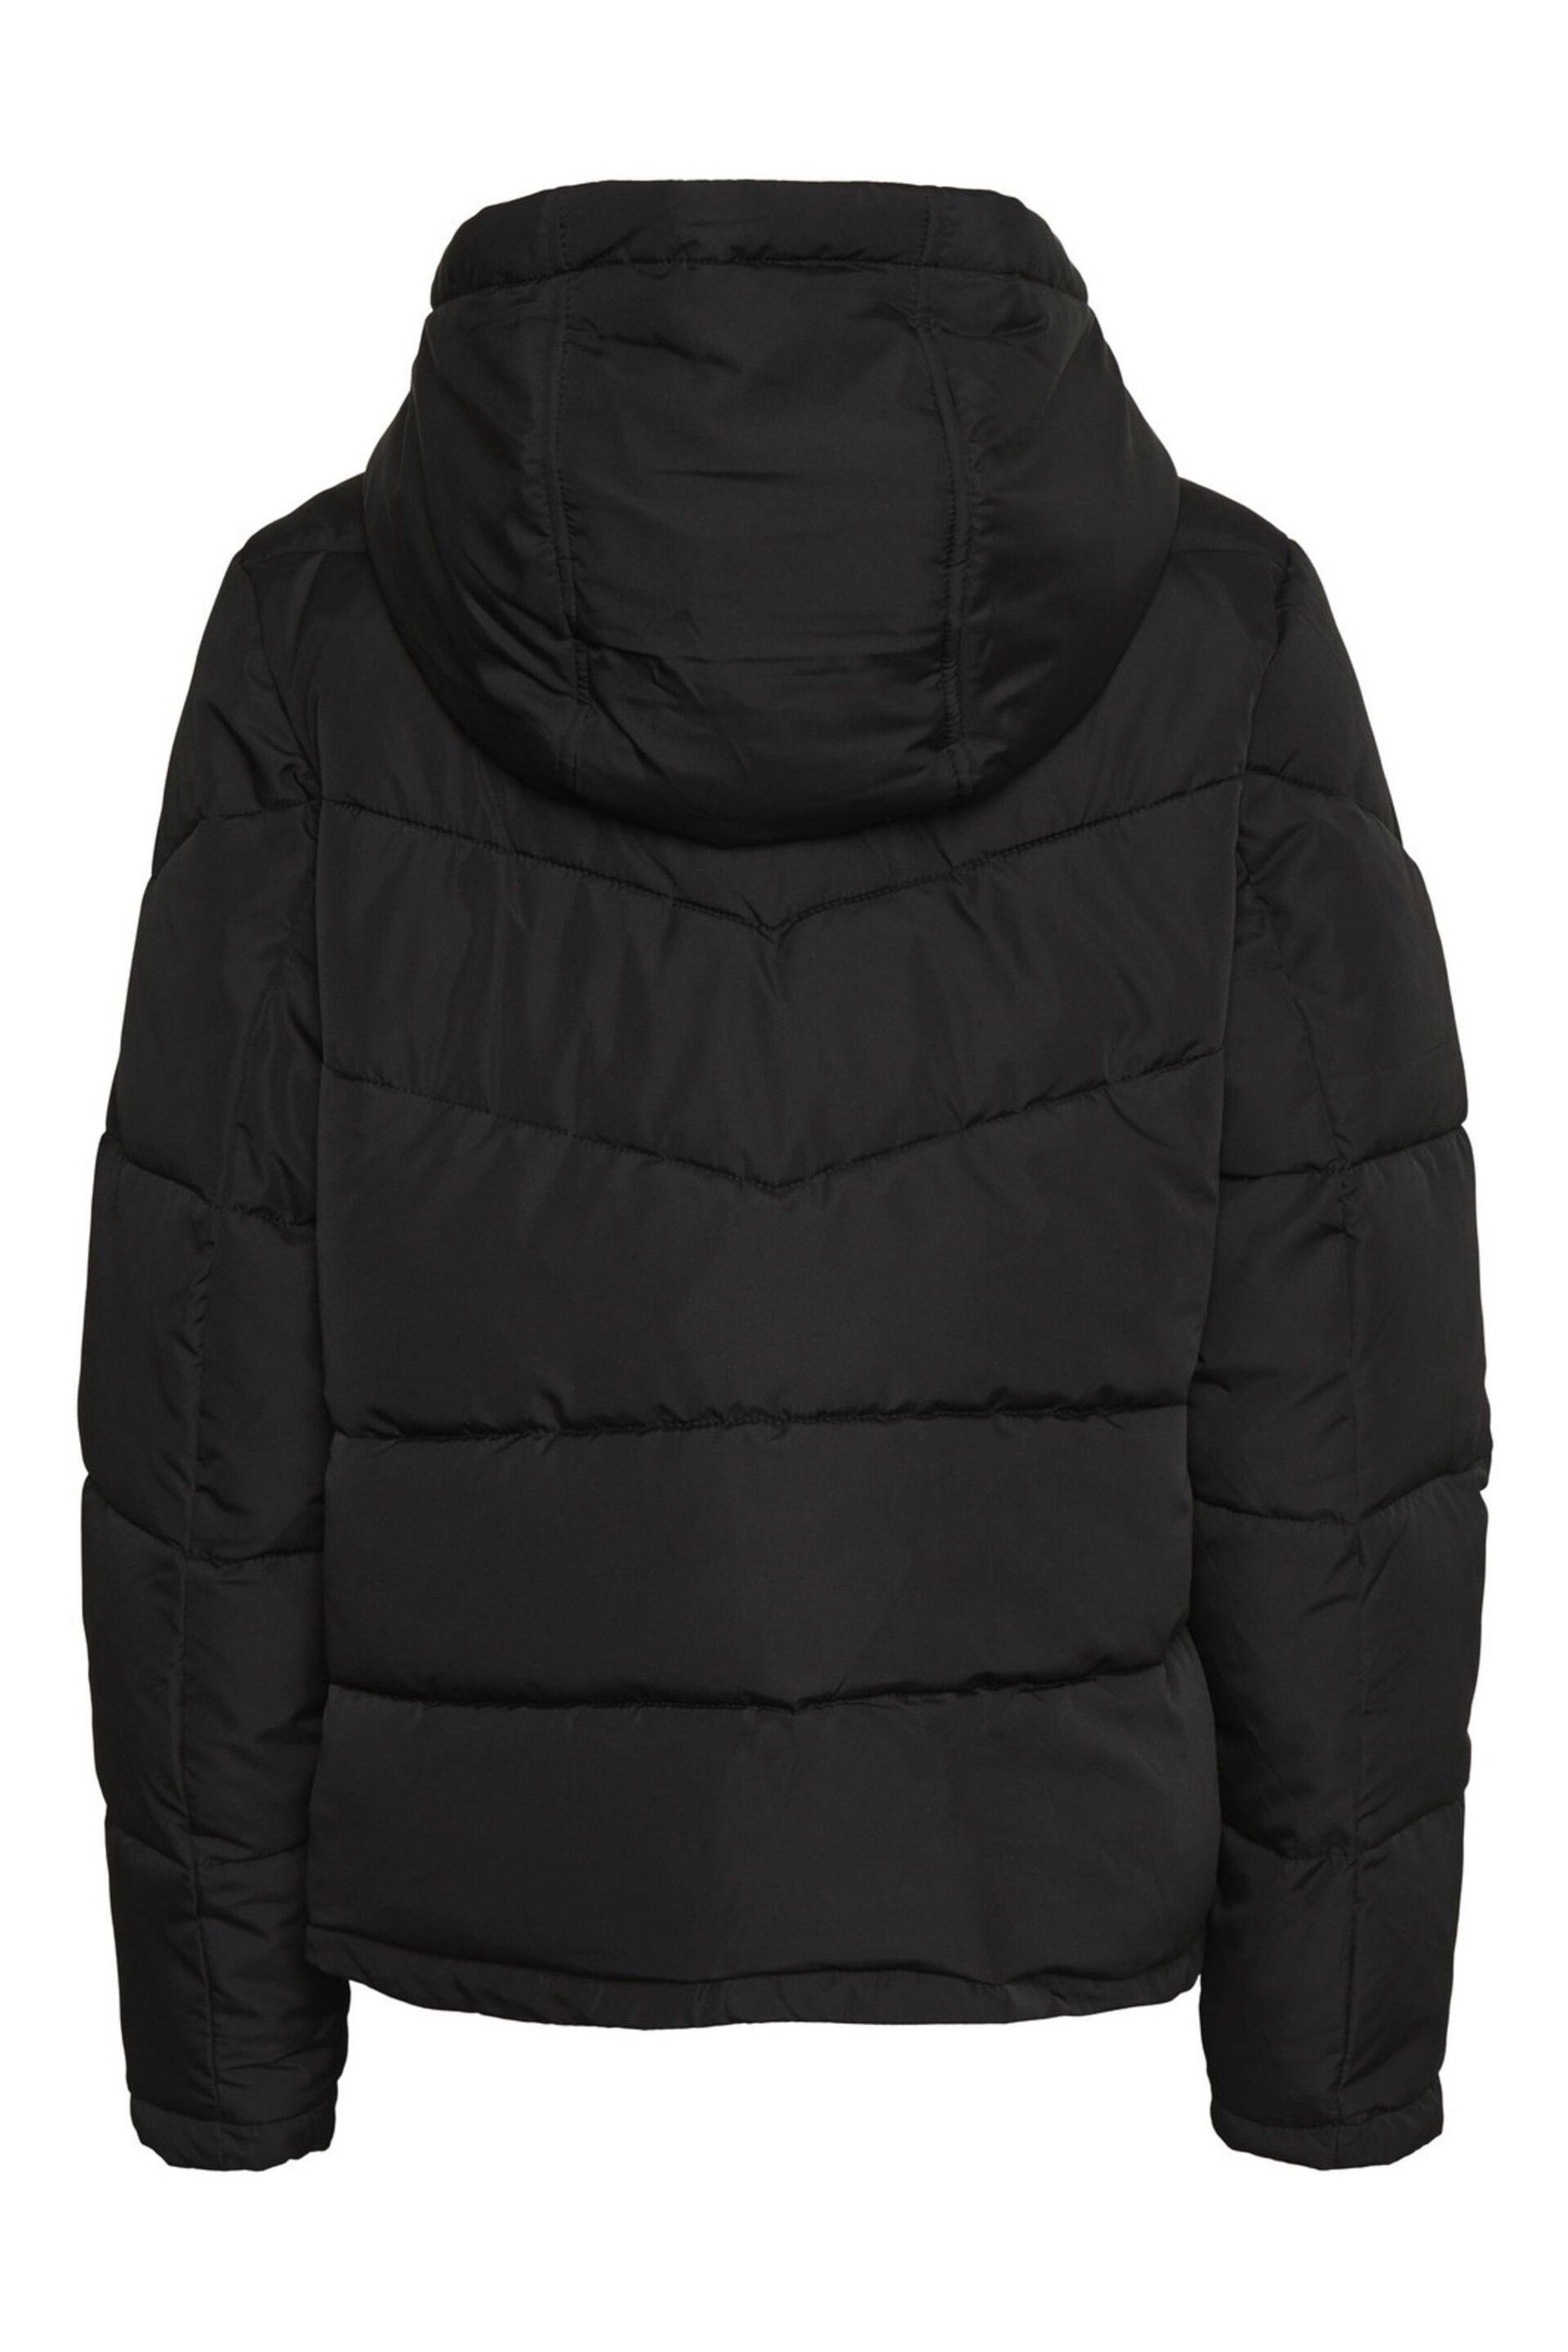 Noisy May Black Padded Jacket With Hood - Image 5 of 5